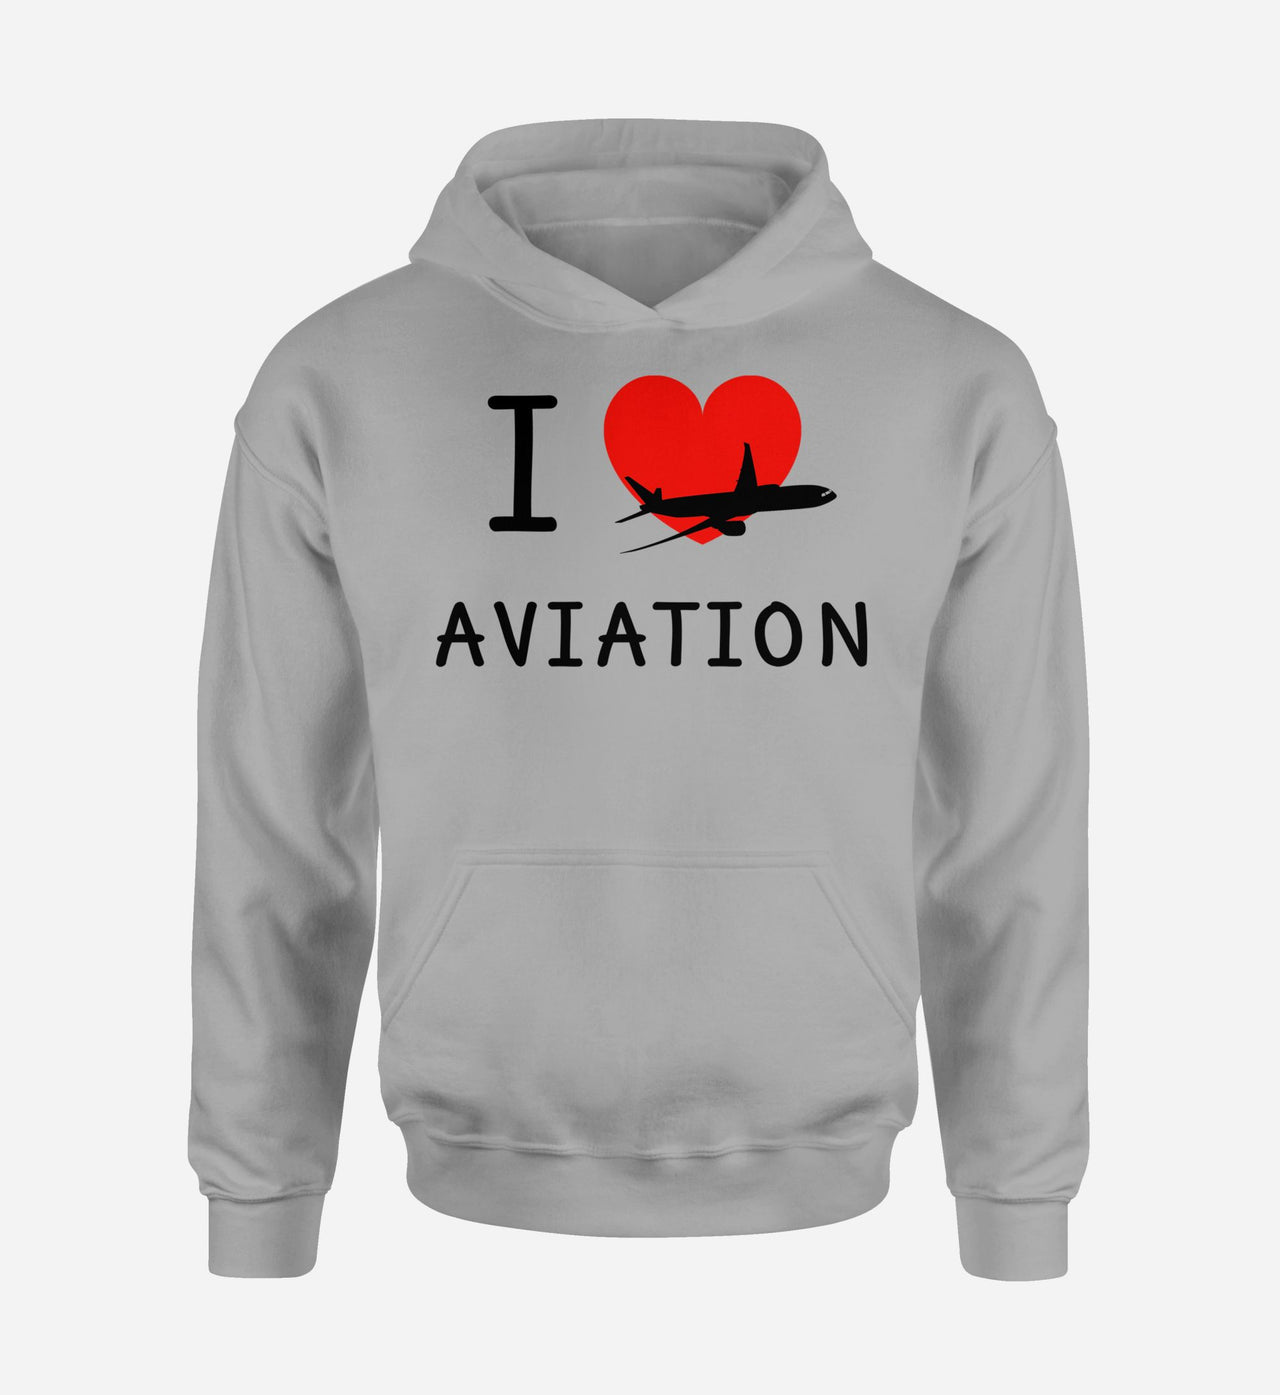 I Love Aviation Designed Hoodies